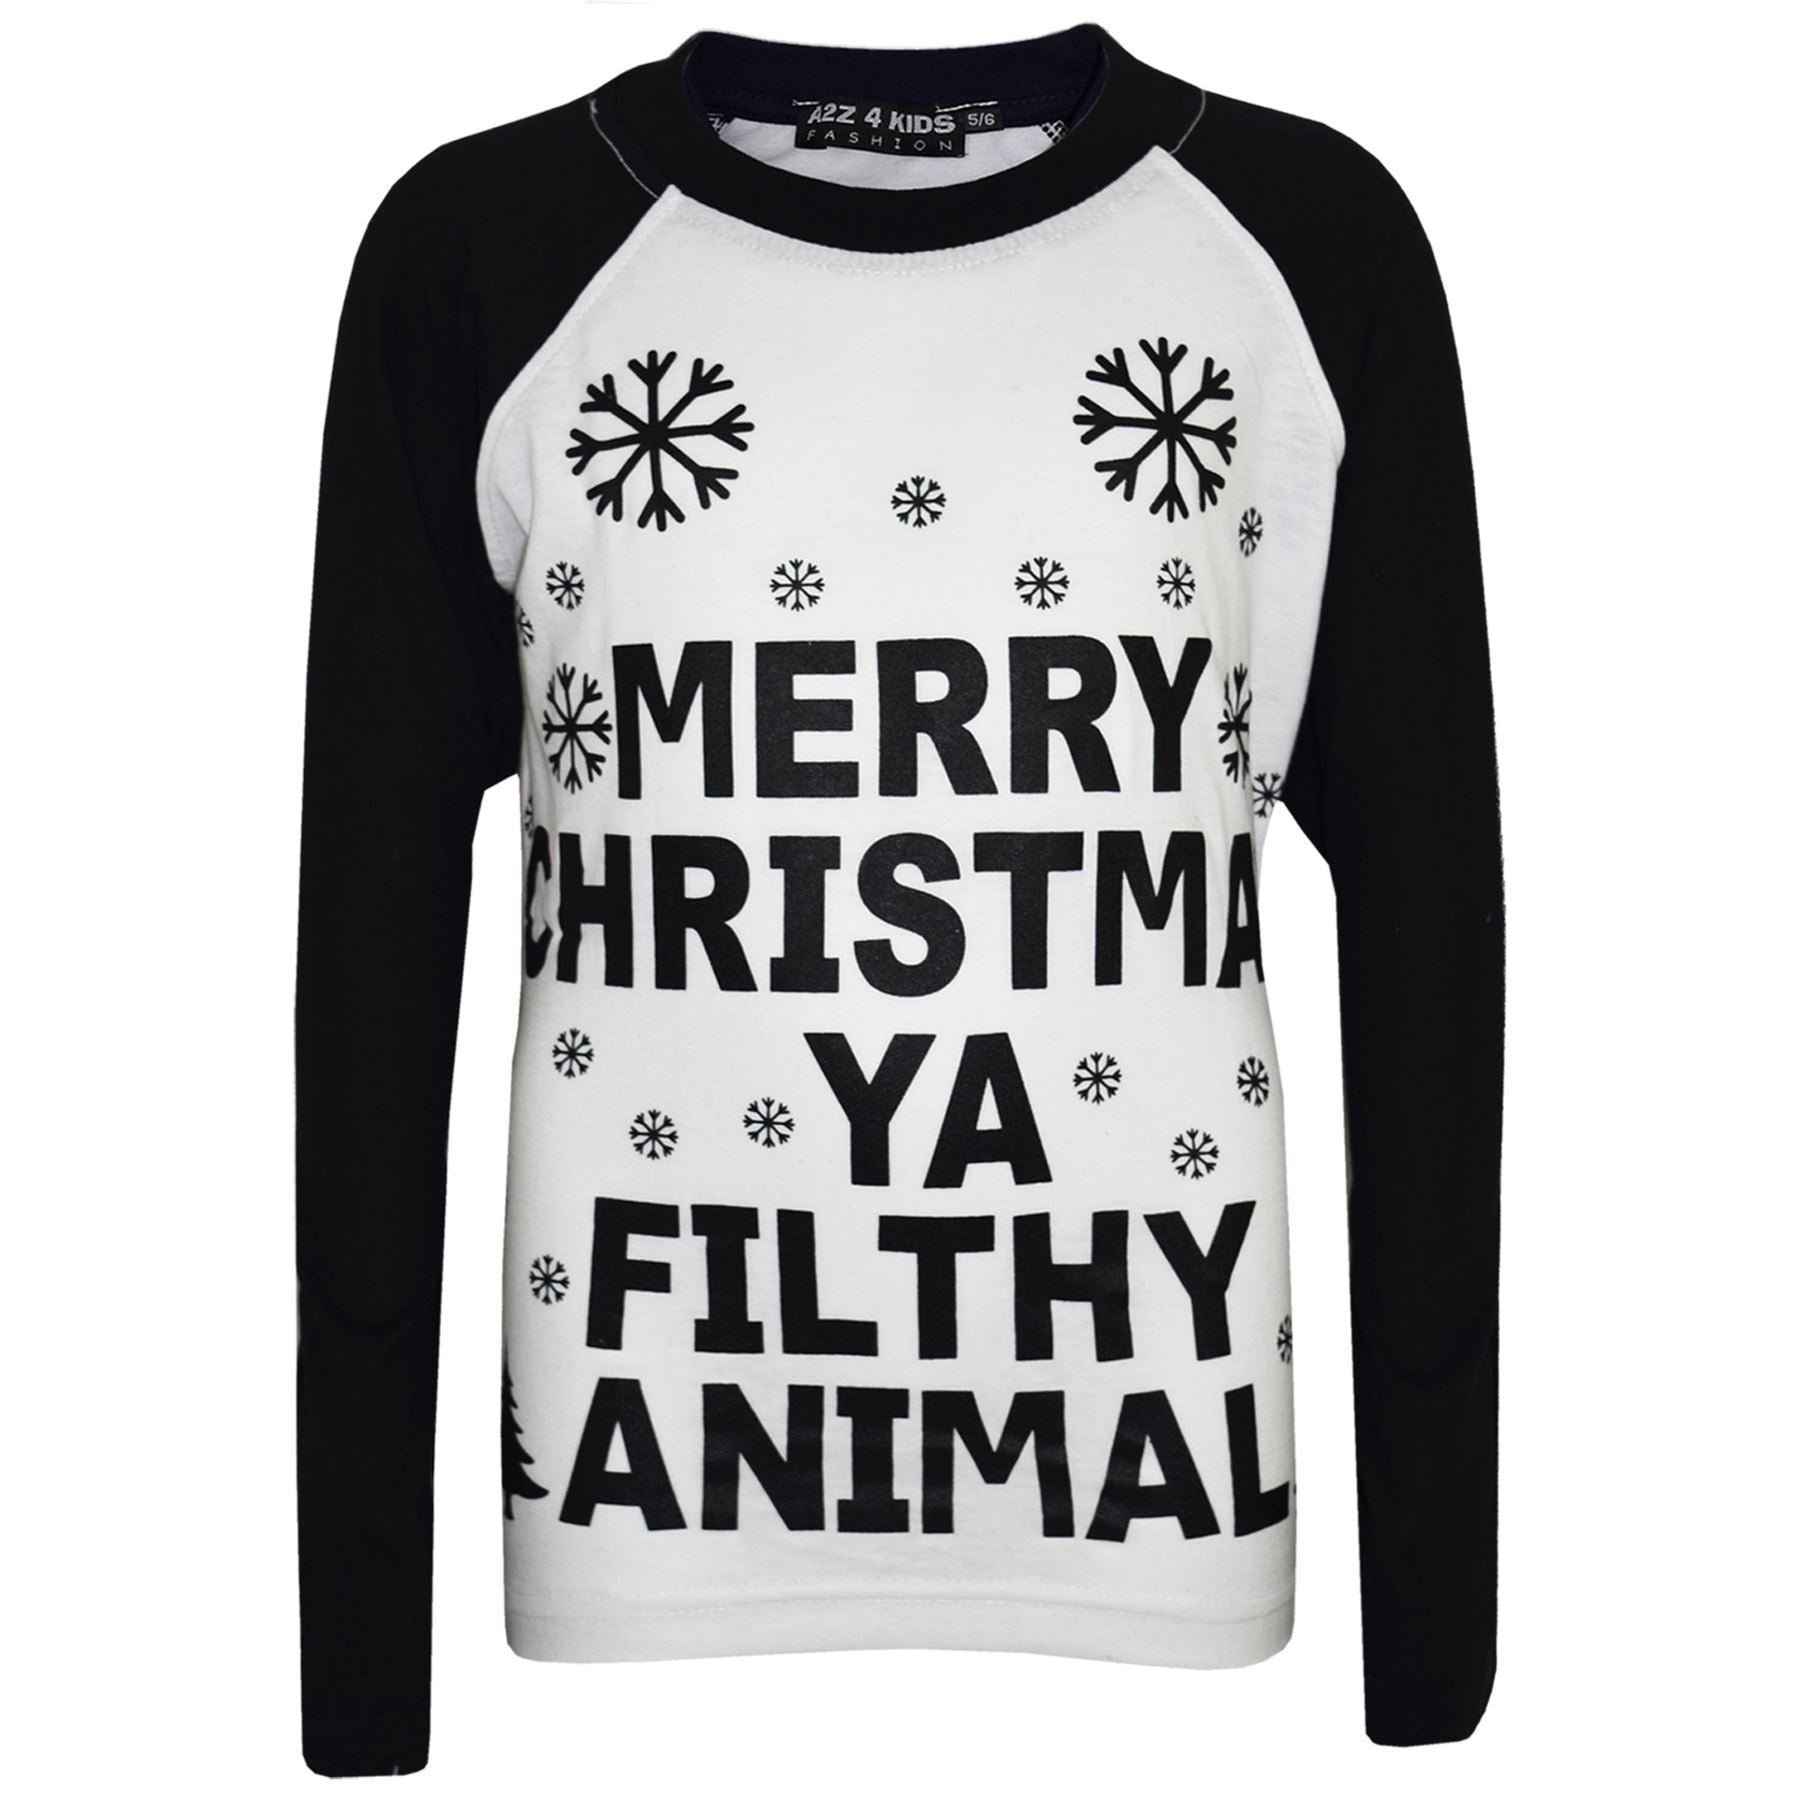 Unisex Merry Xmas Ya Filthy Animal Print Black Pyjamas Set